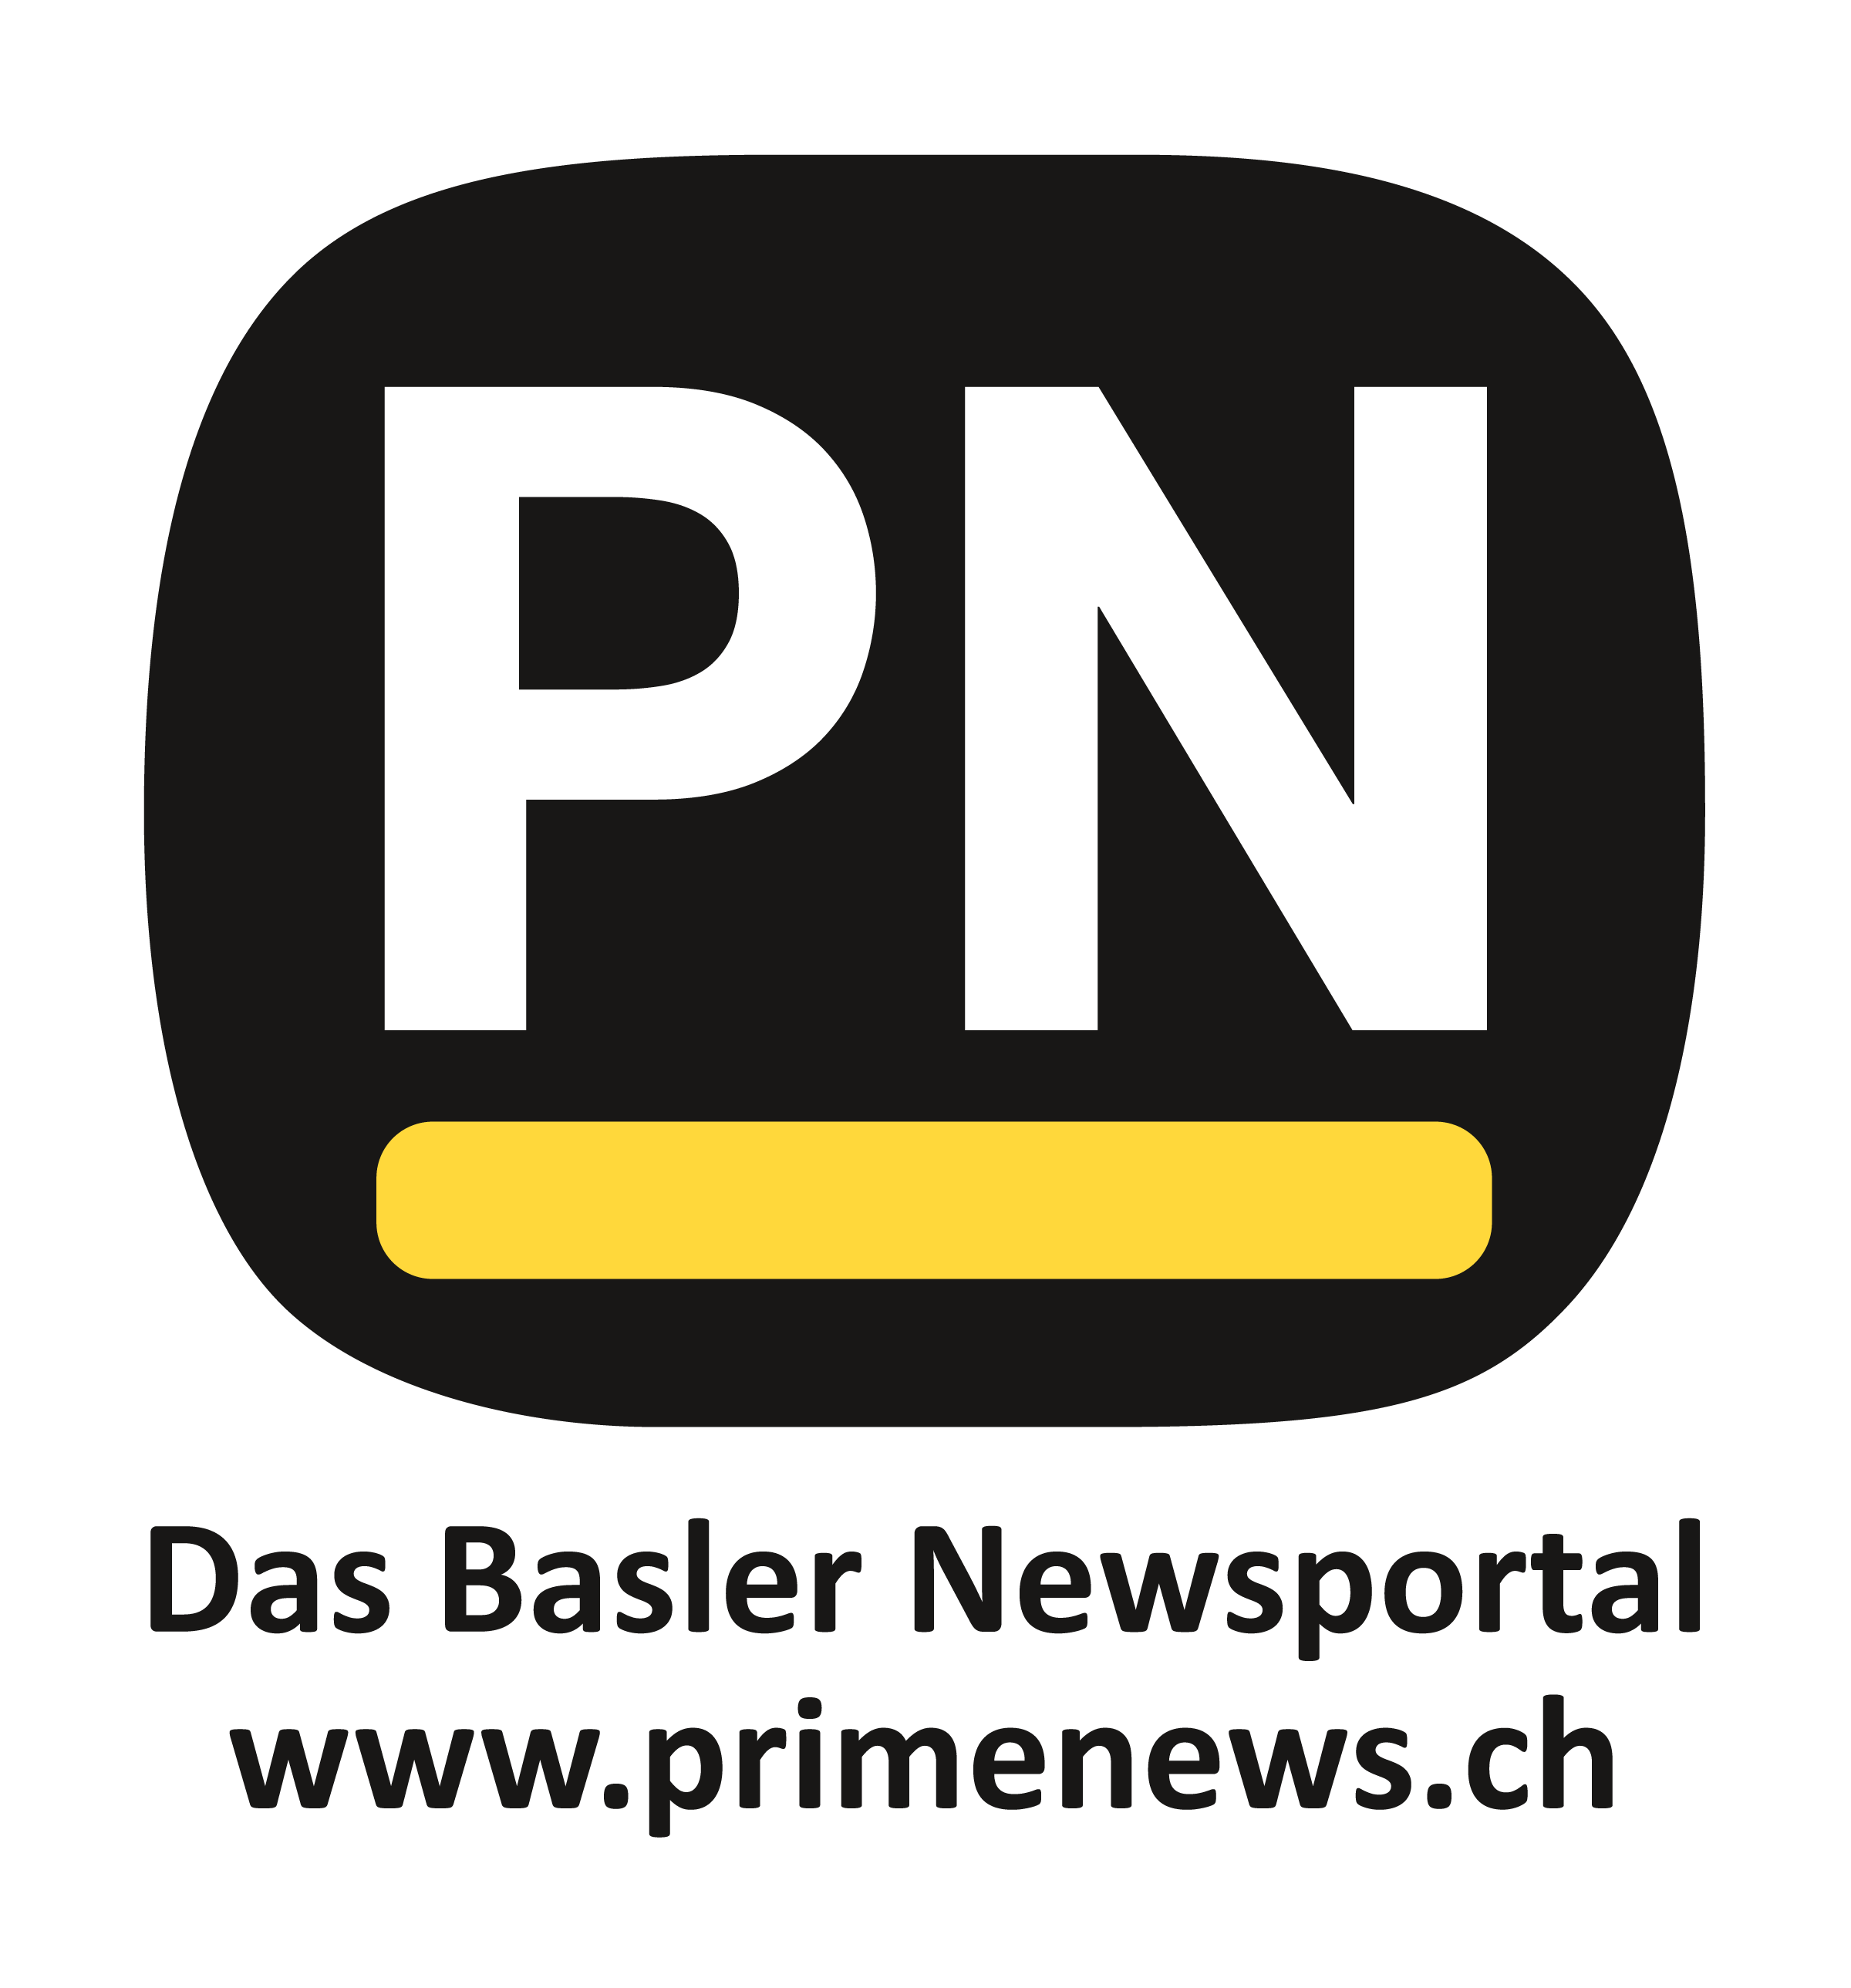 PrimeNews